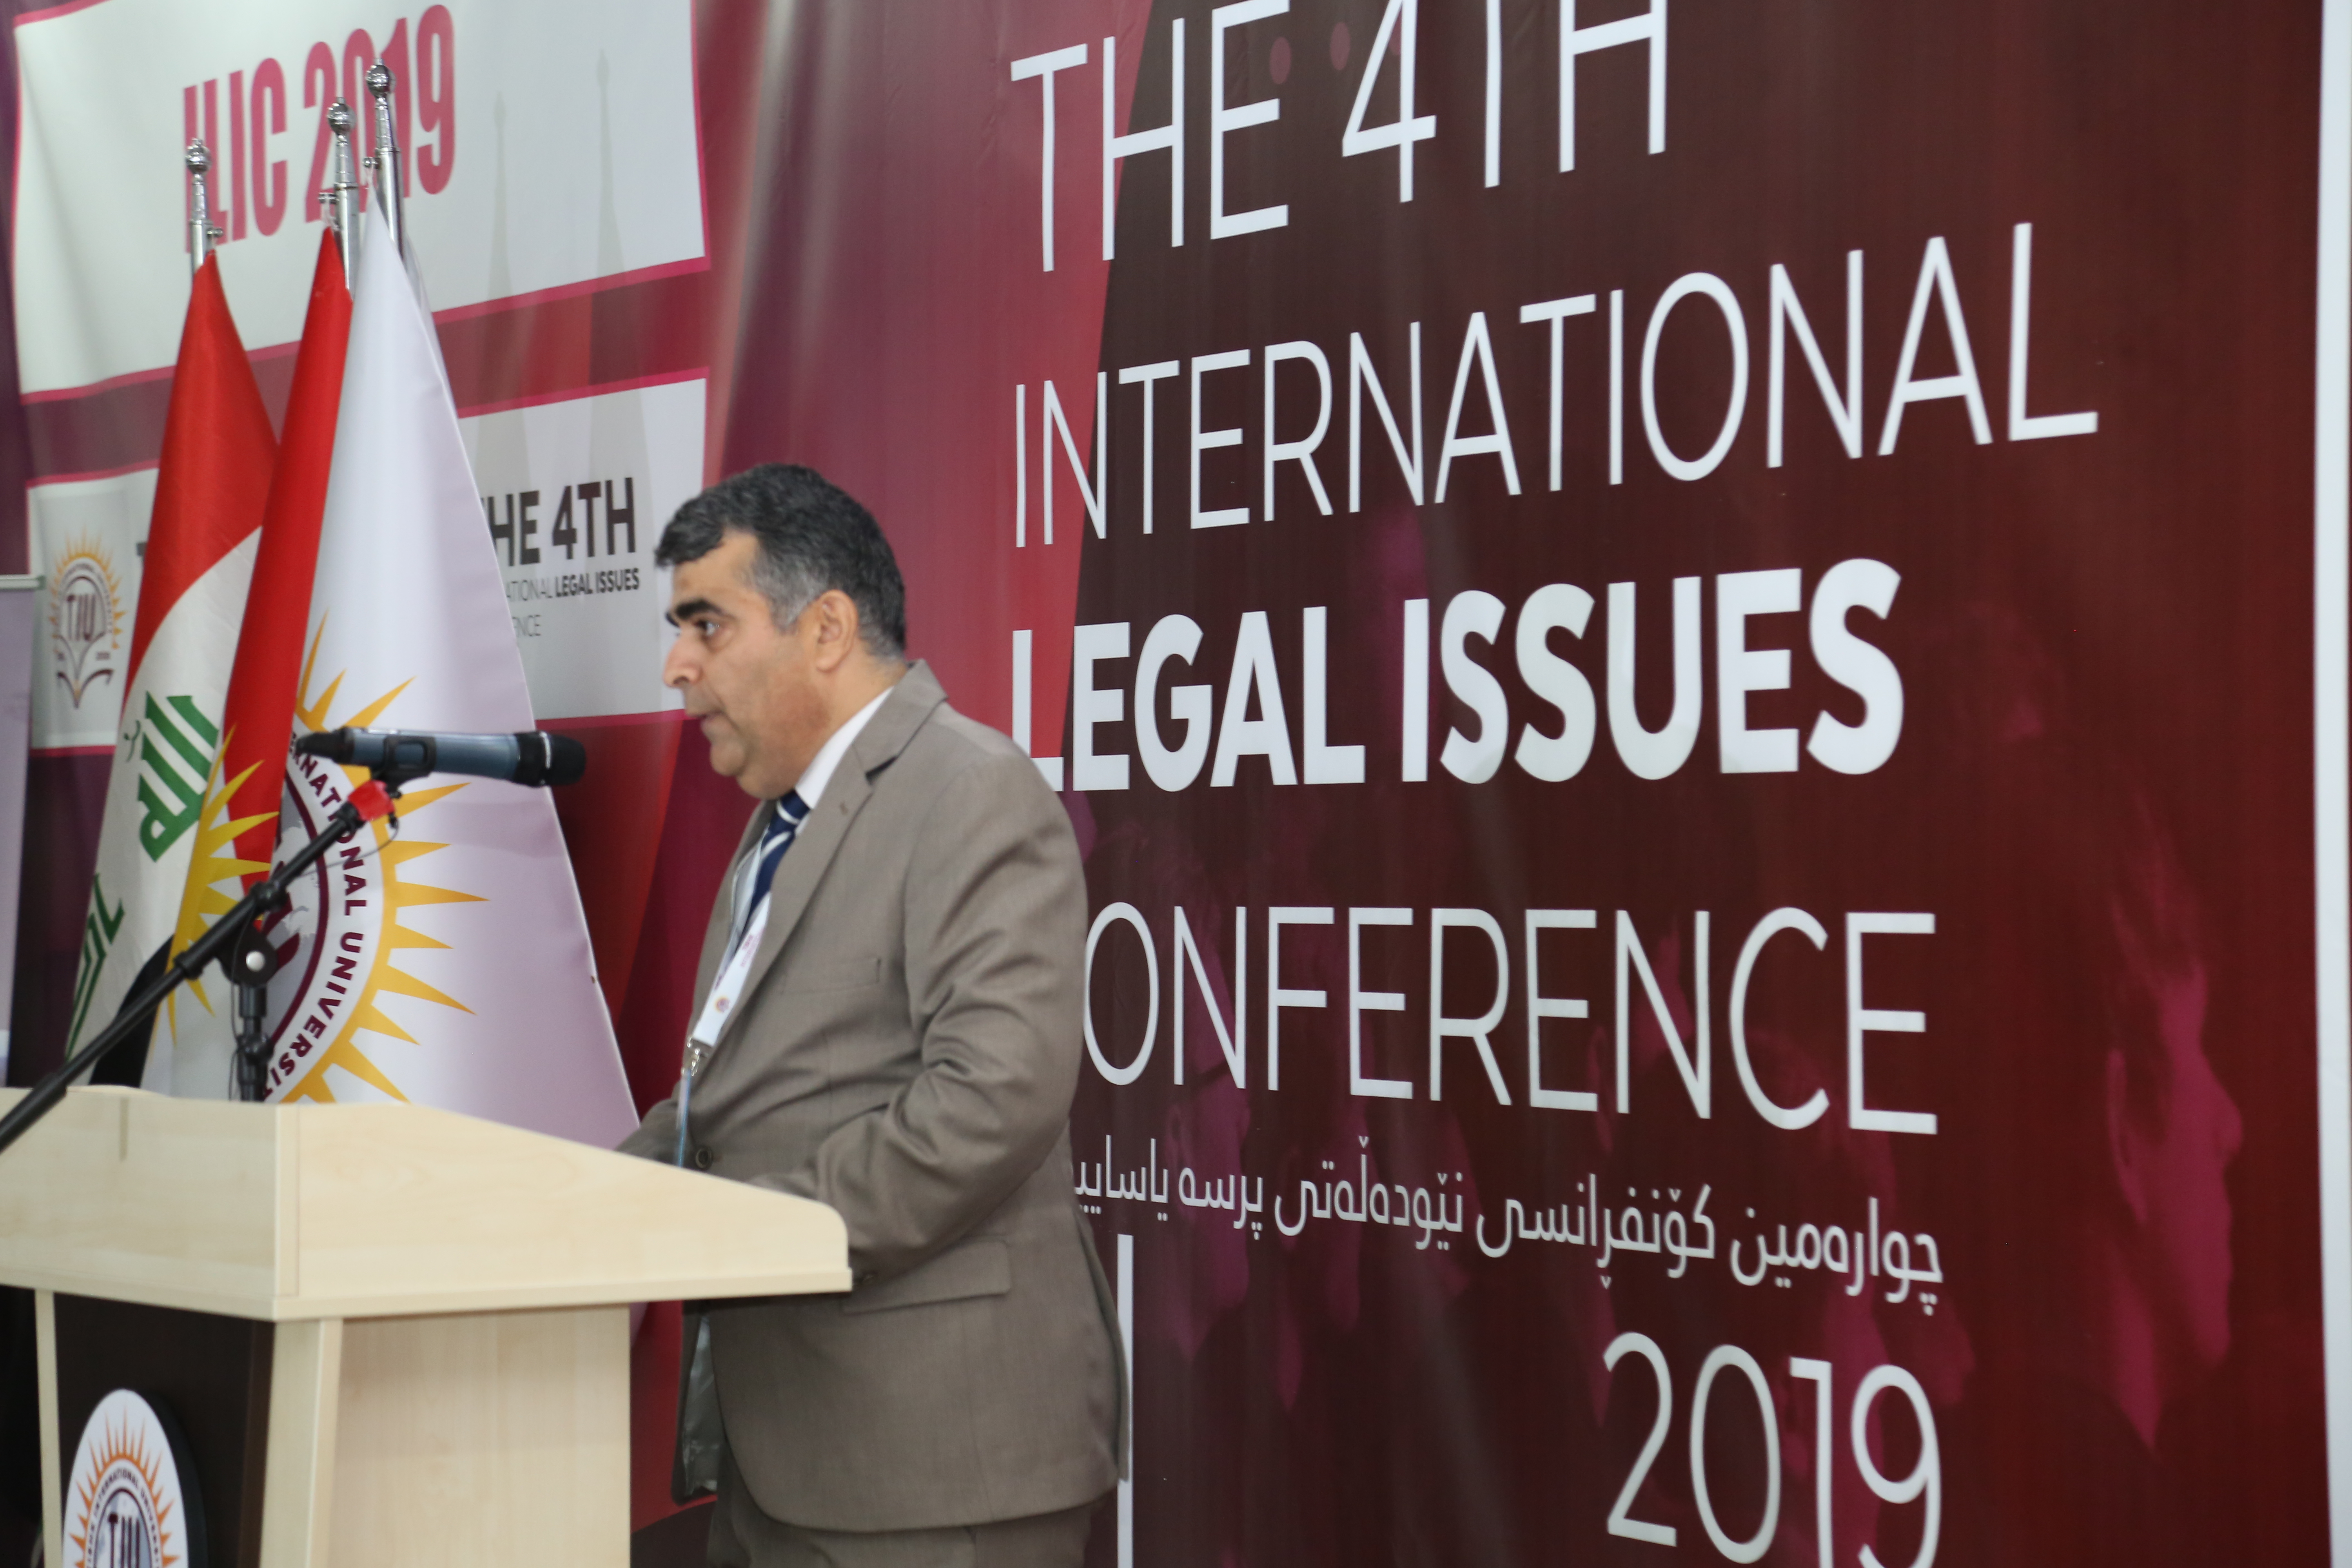 Tishk International University | International Legal Issues conference